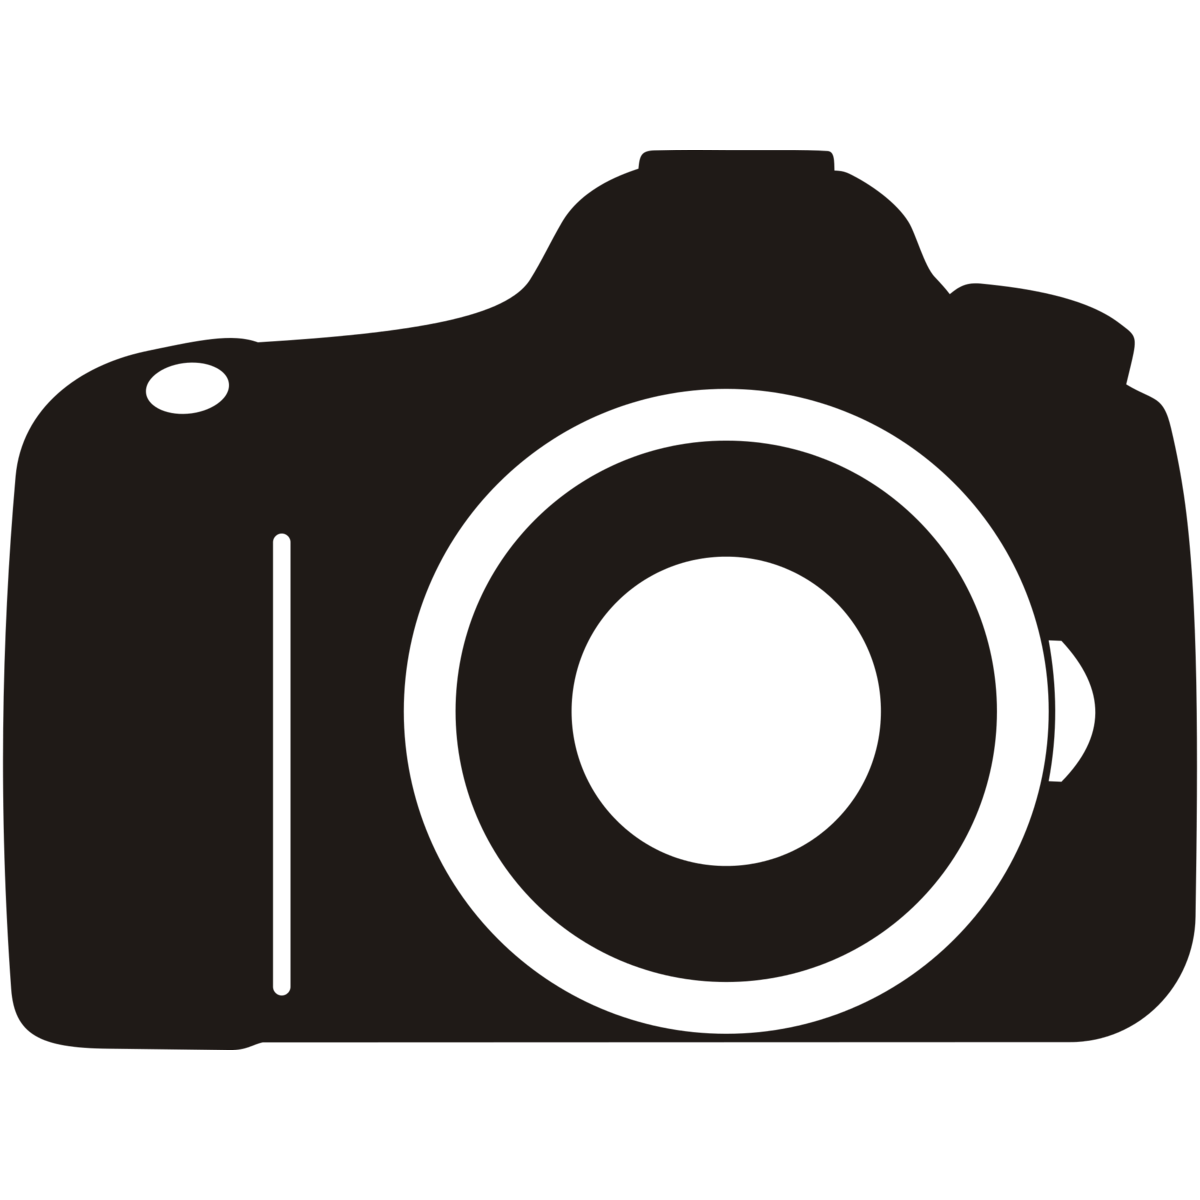 Camera Logo - Free Camera Logo Png, Download Free Clip Art, Free Clip Art on ...